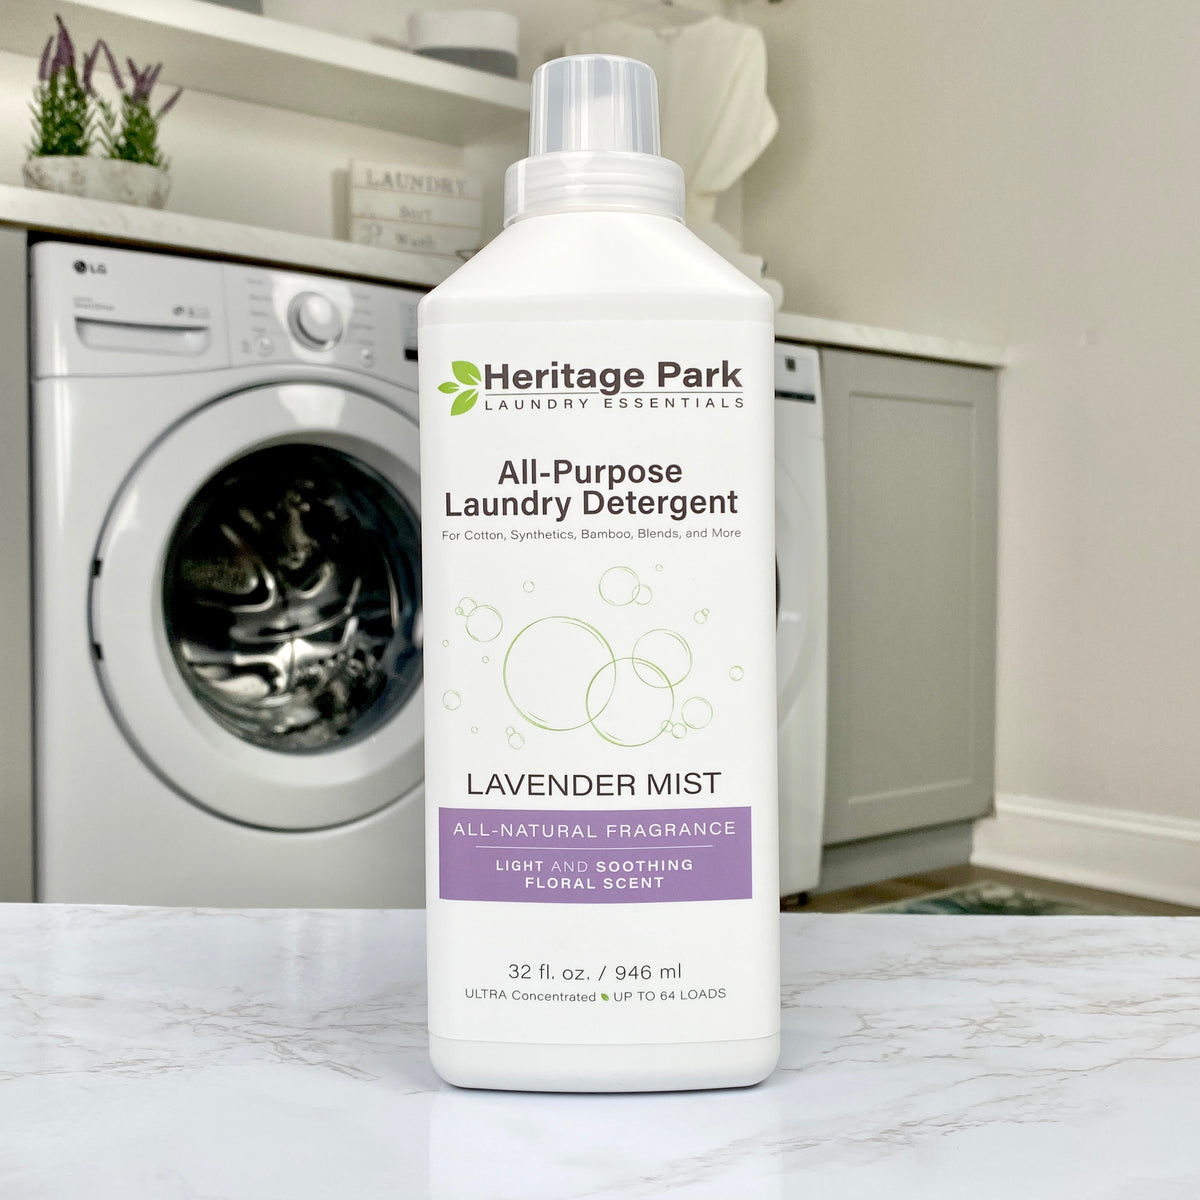 Heritage Park All-Purpose Laundry Detergent - Lavender Mist